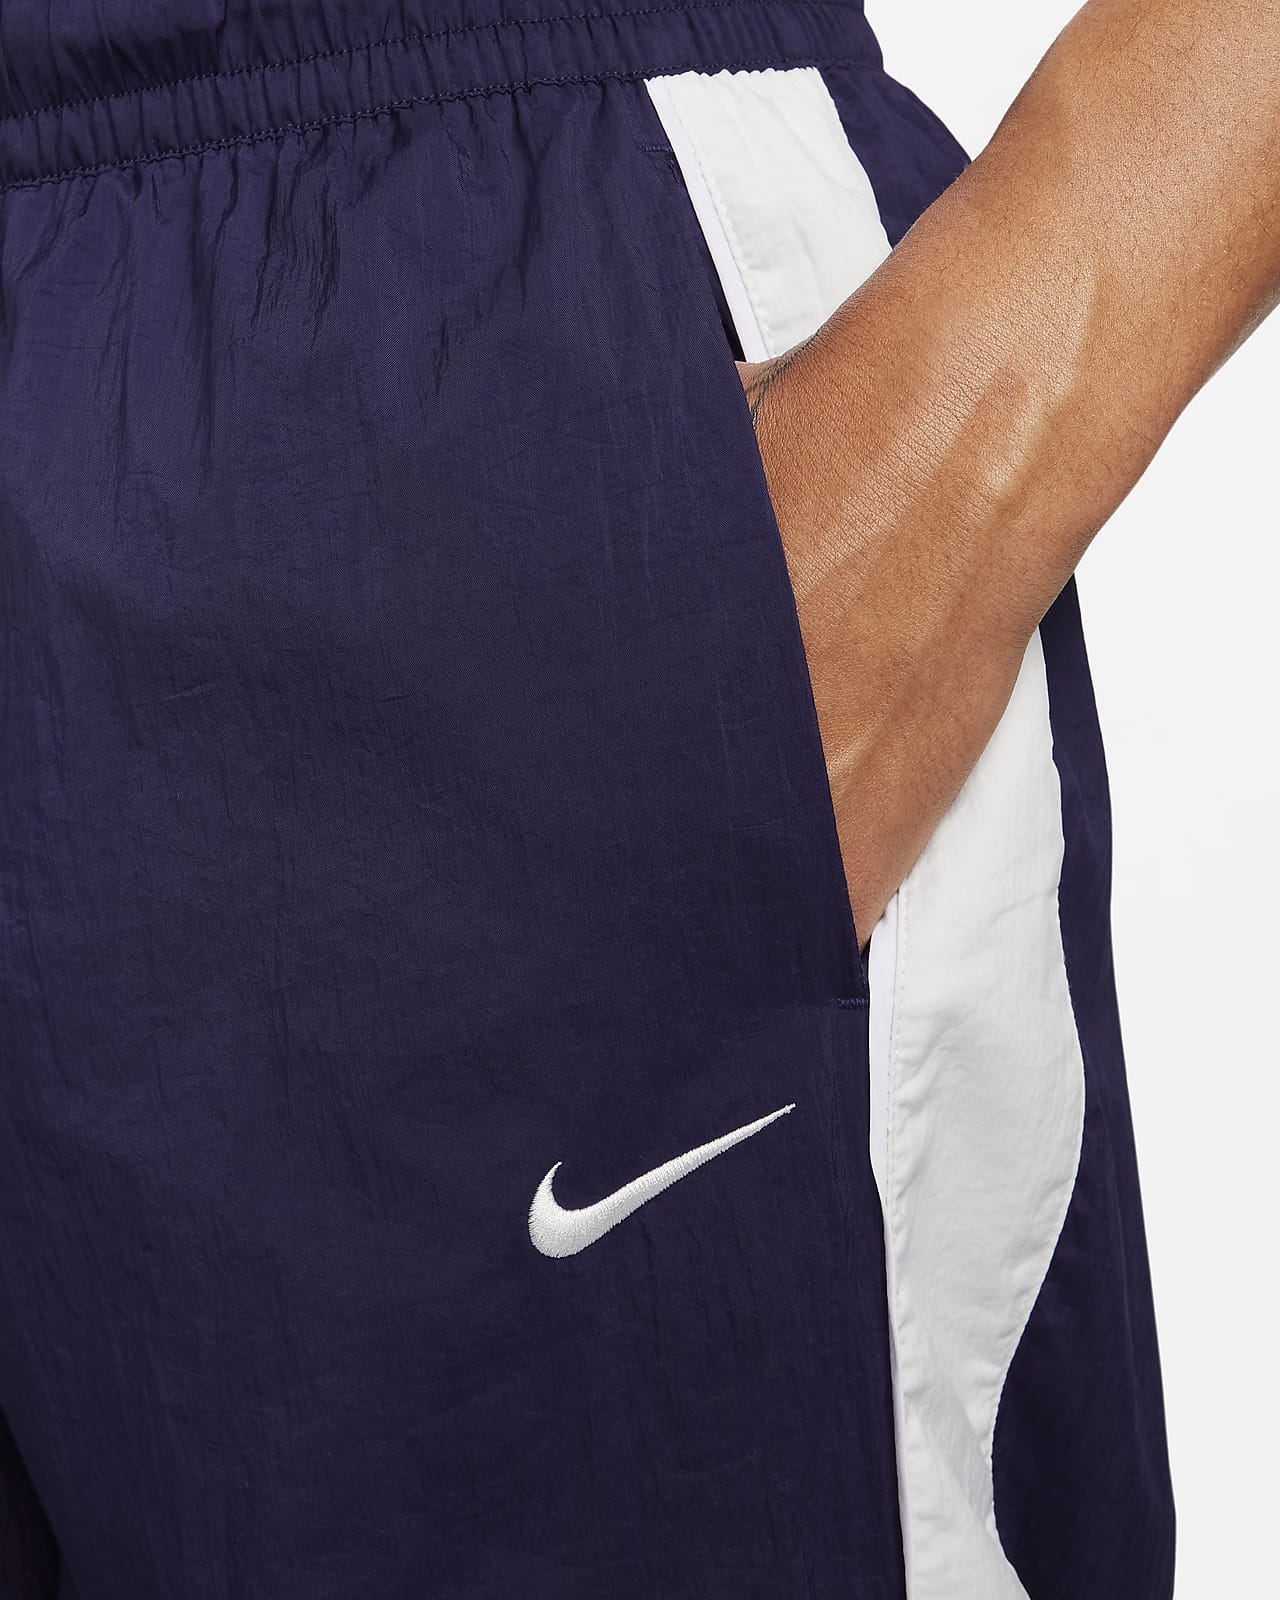 Hommes Basketball Vêtements. Nike FR